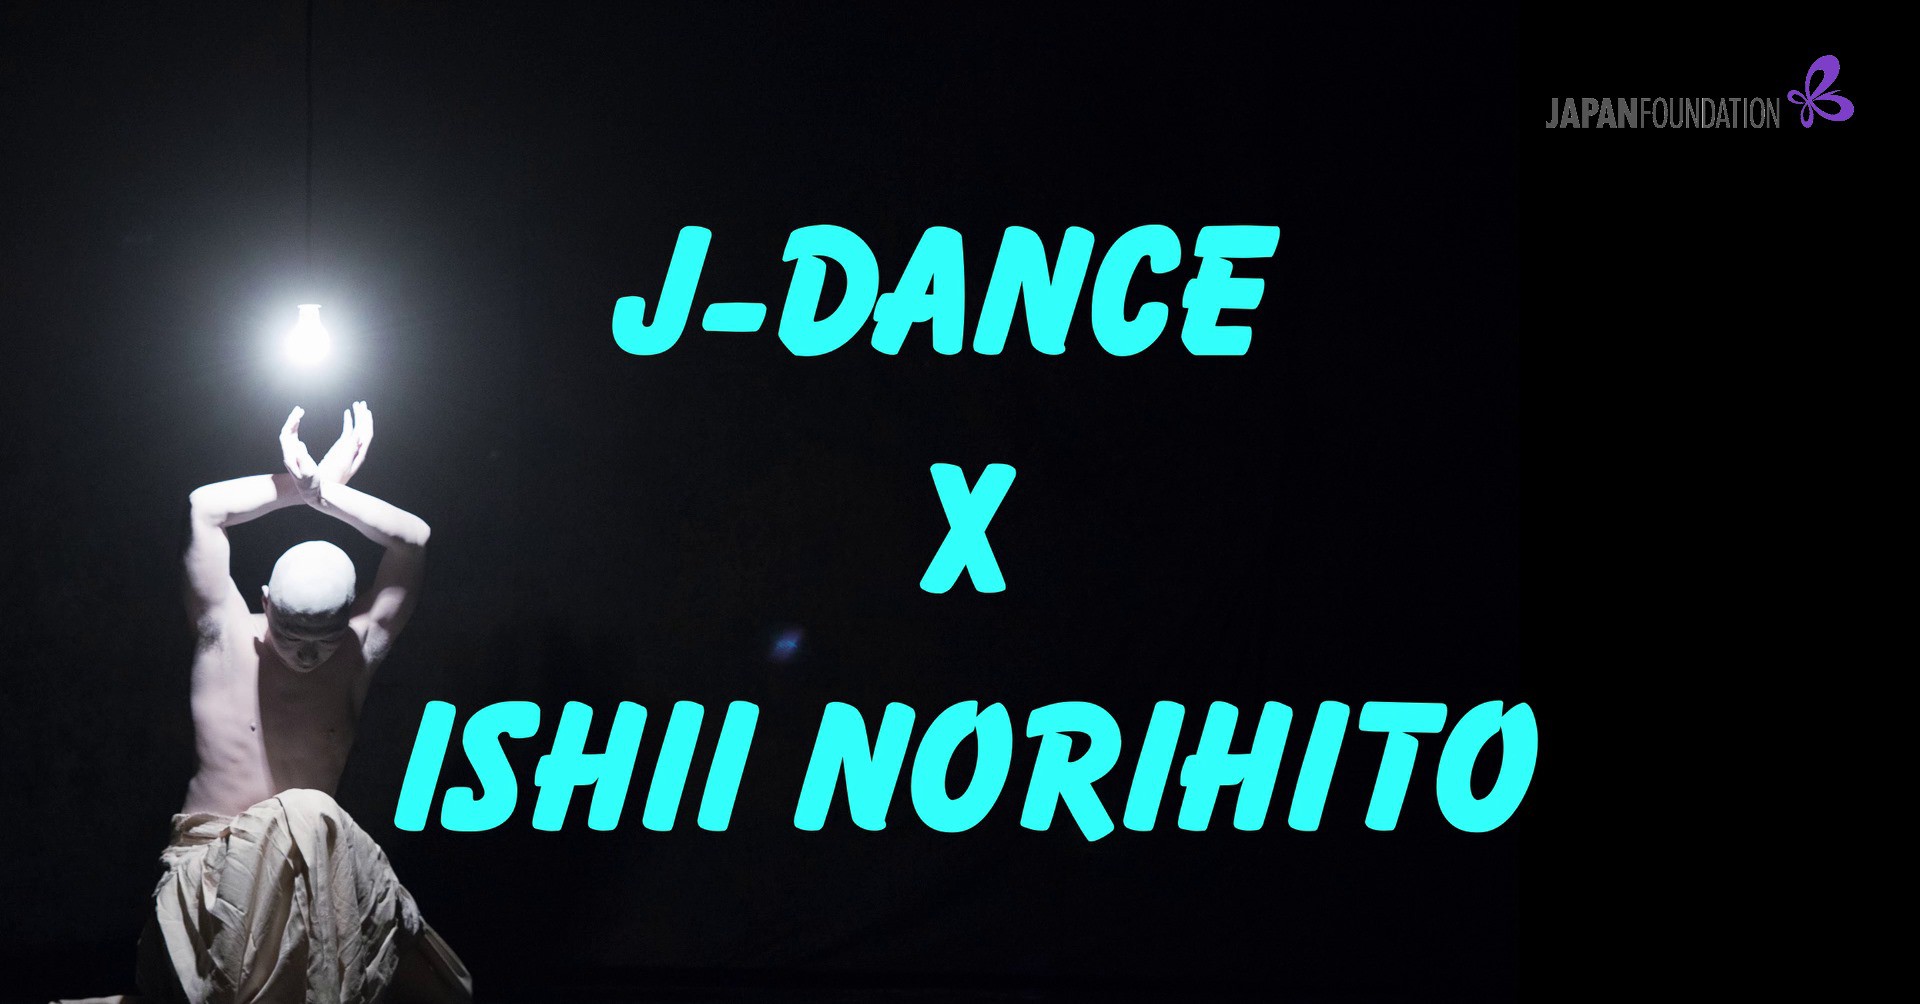 J-DANCE Special Video + Workshop #2: ISHII NORIHITO